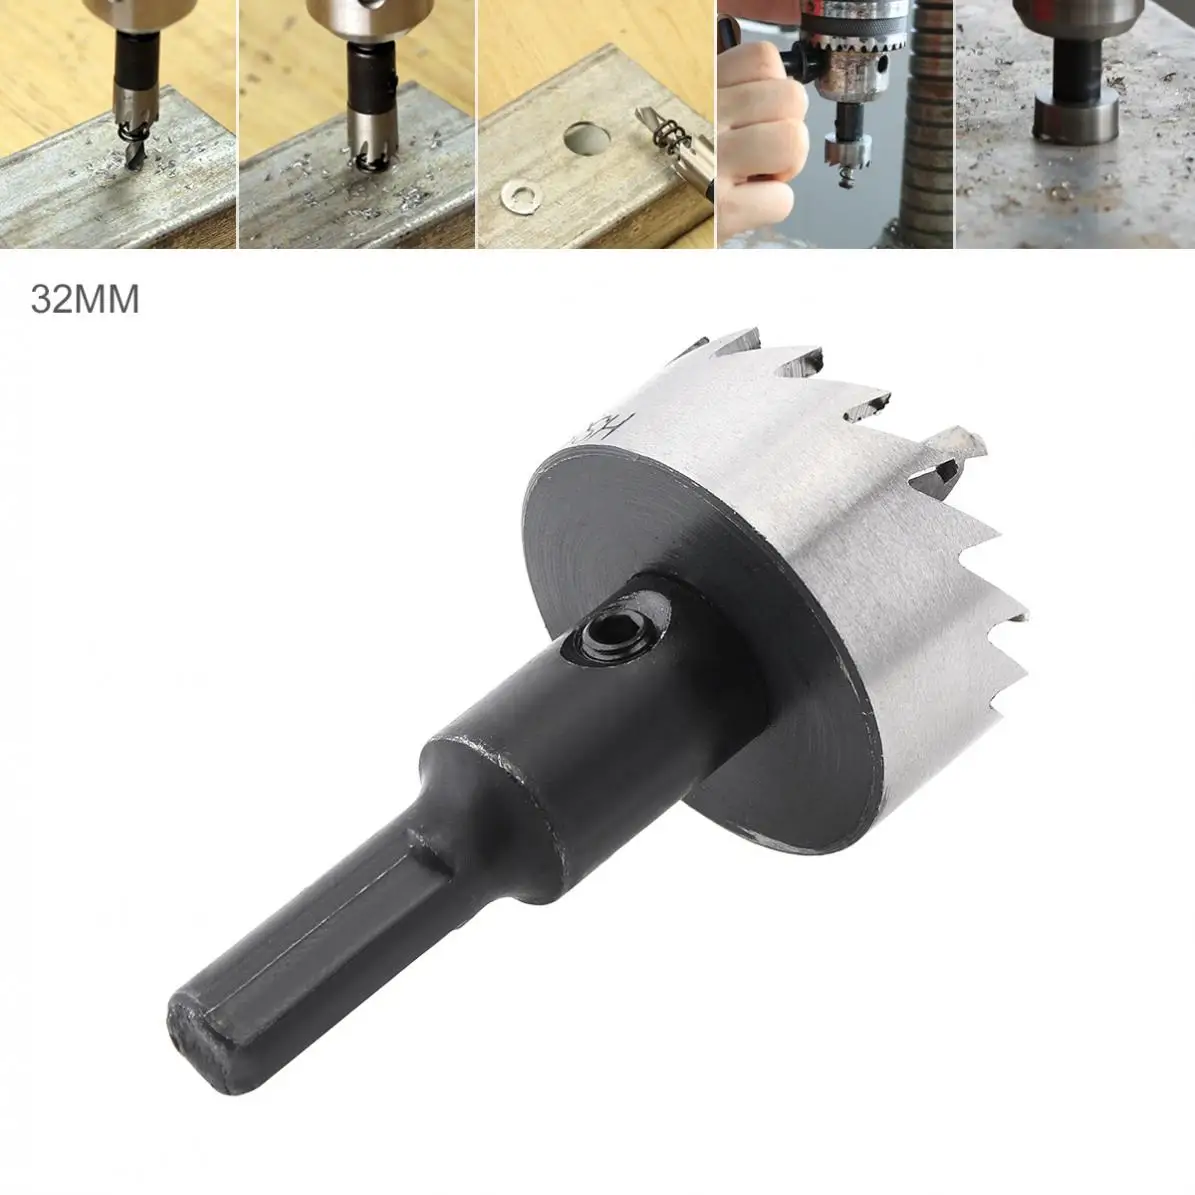 32mm HSS Hole Saw Cutter Drill Bits for Pistol Drills / Bench Drills / Magnetic Drills /Air Gun Drills